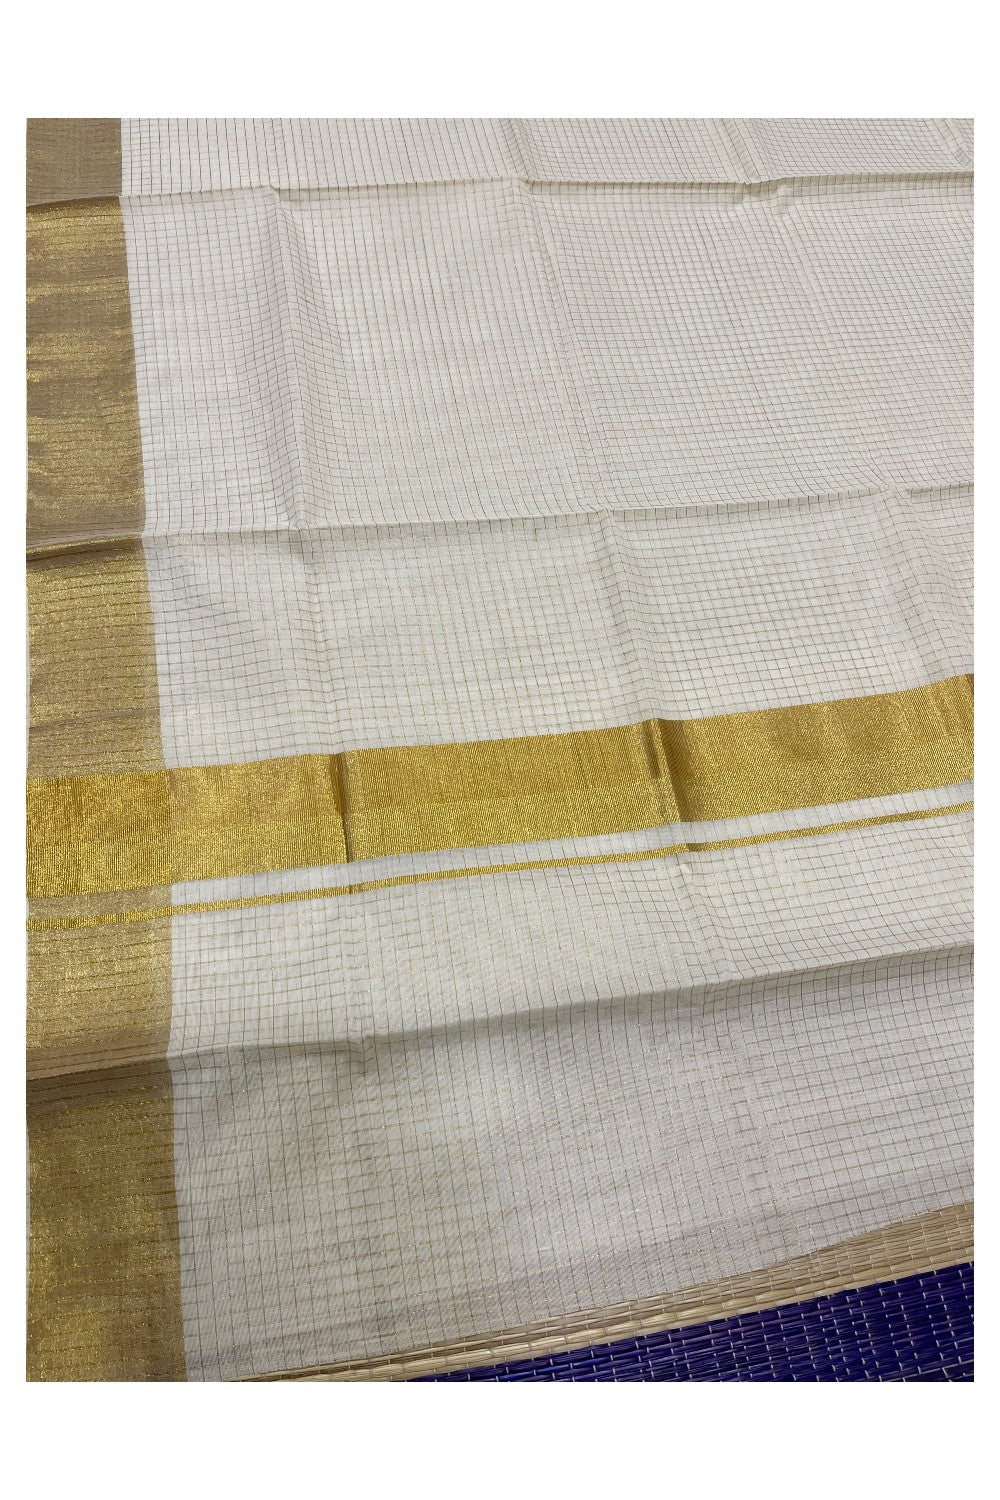 Pure Cotton Kerala Saree with Kasavu Small Check Designs Across Body with 3x3 Border